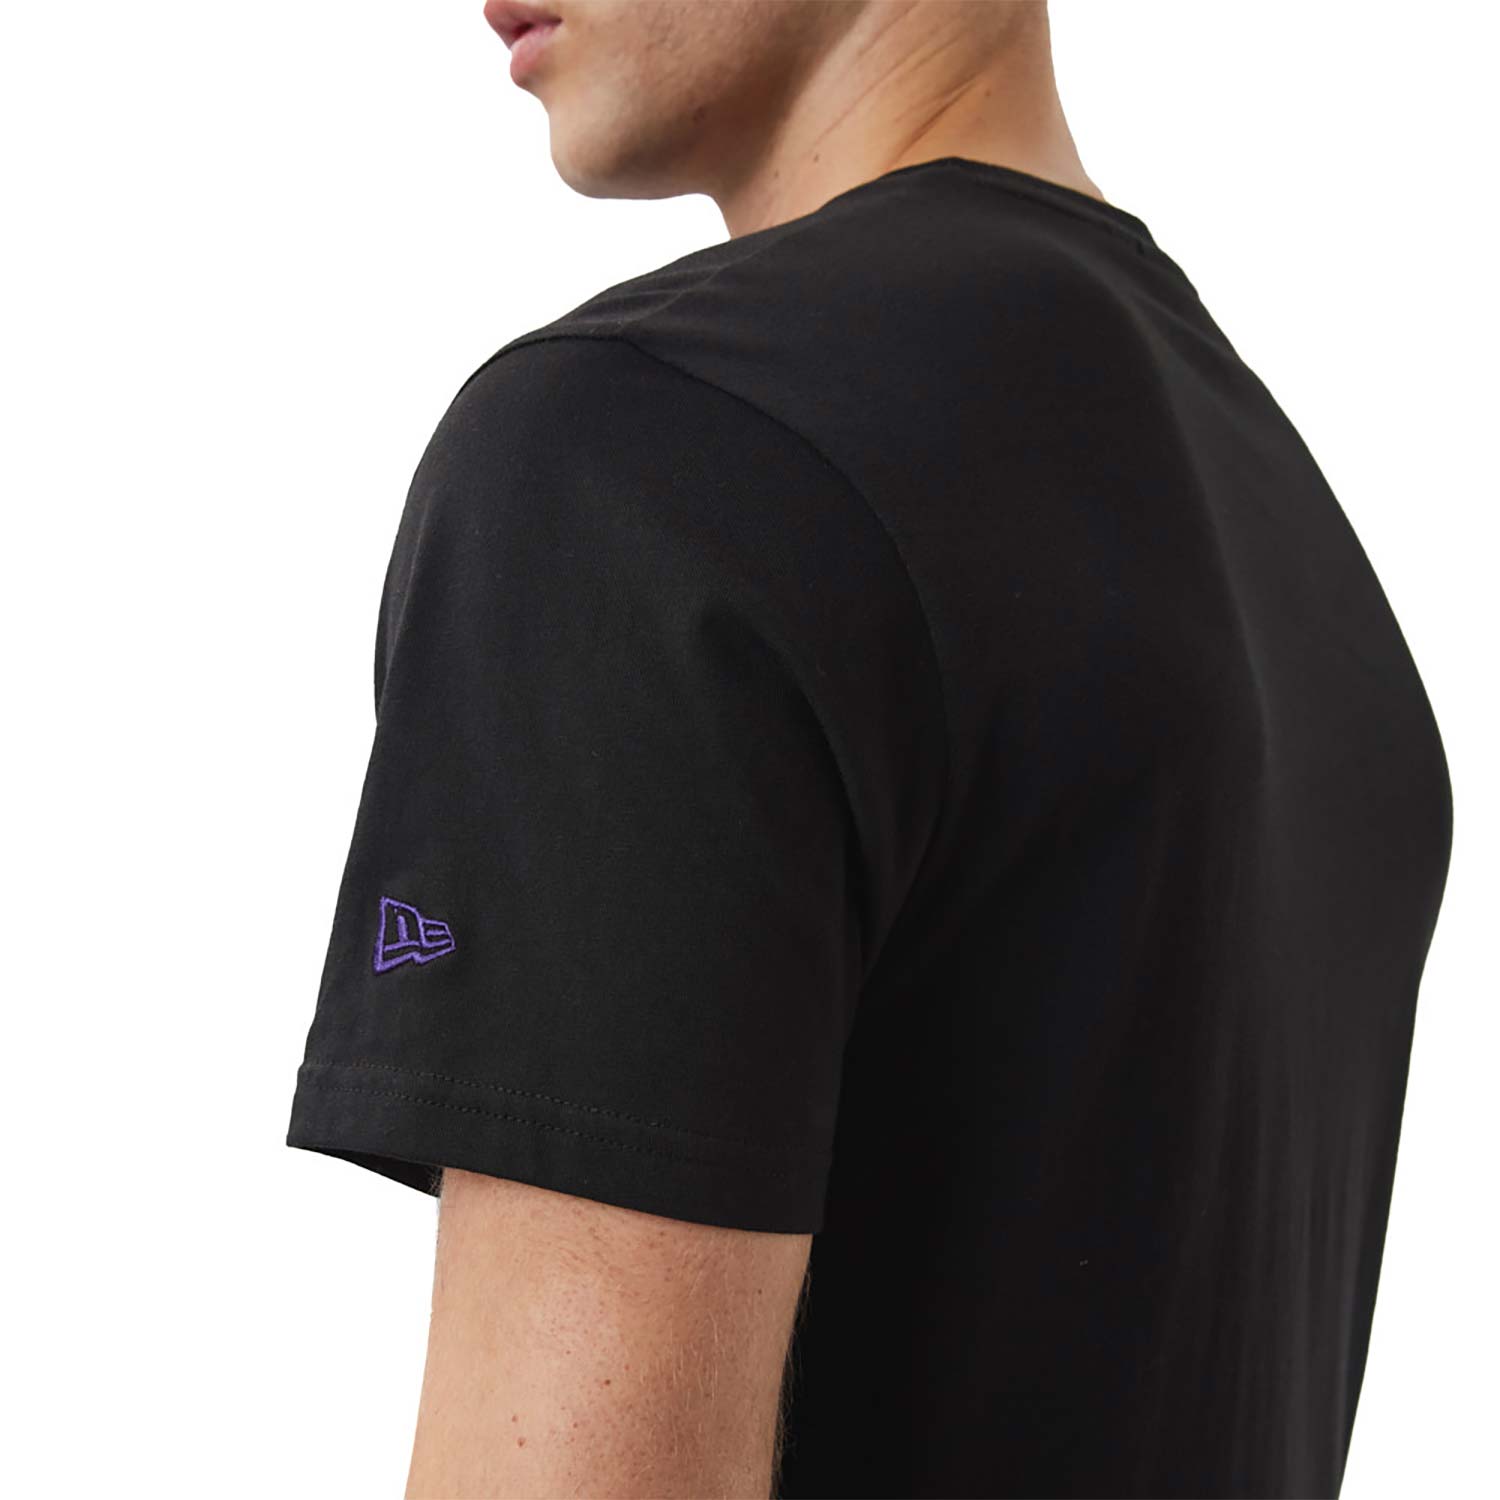 LA Lakers NBA Script Black T-Shirt